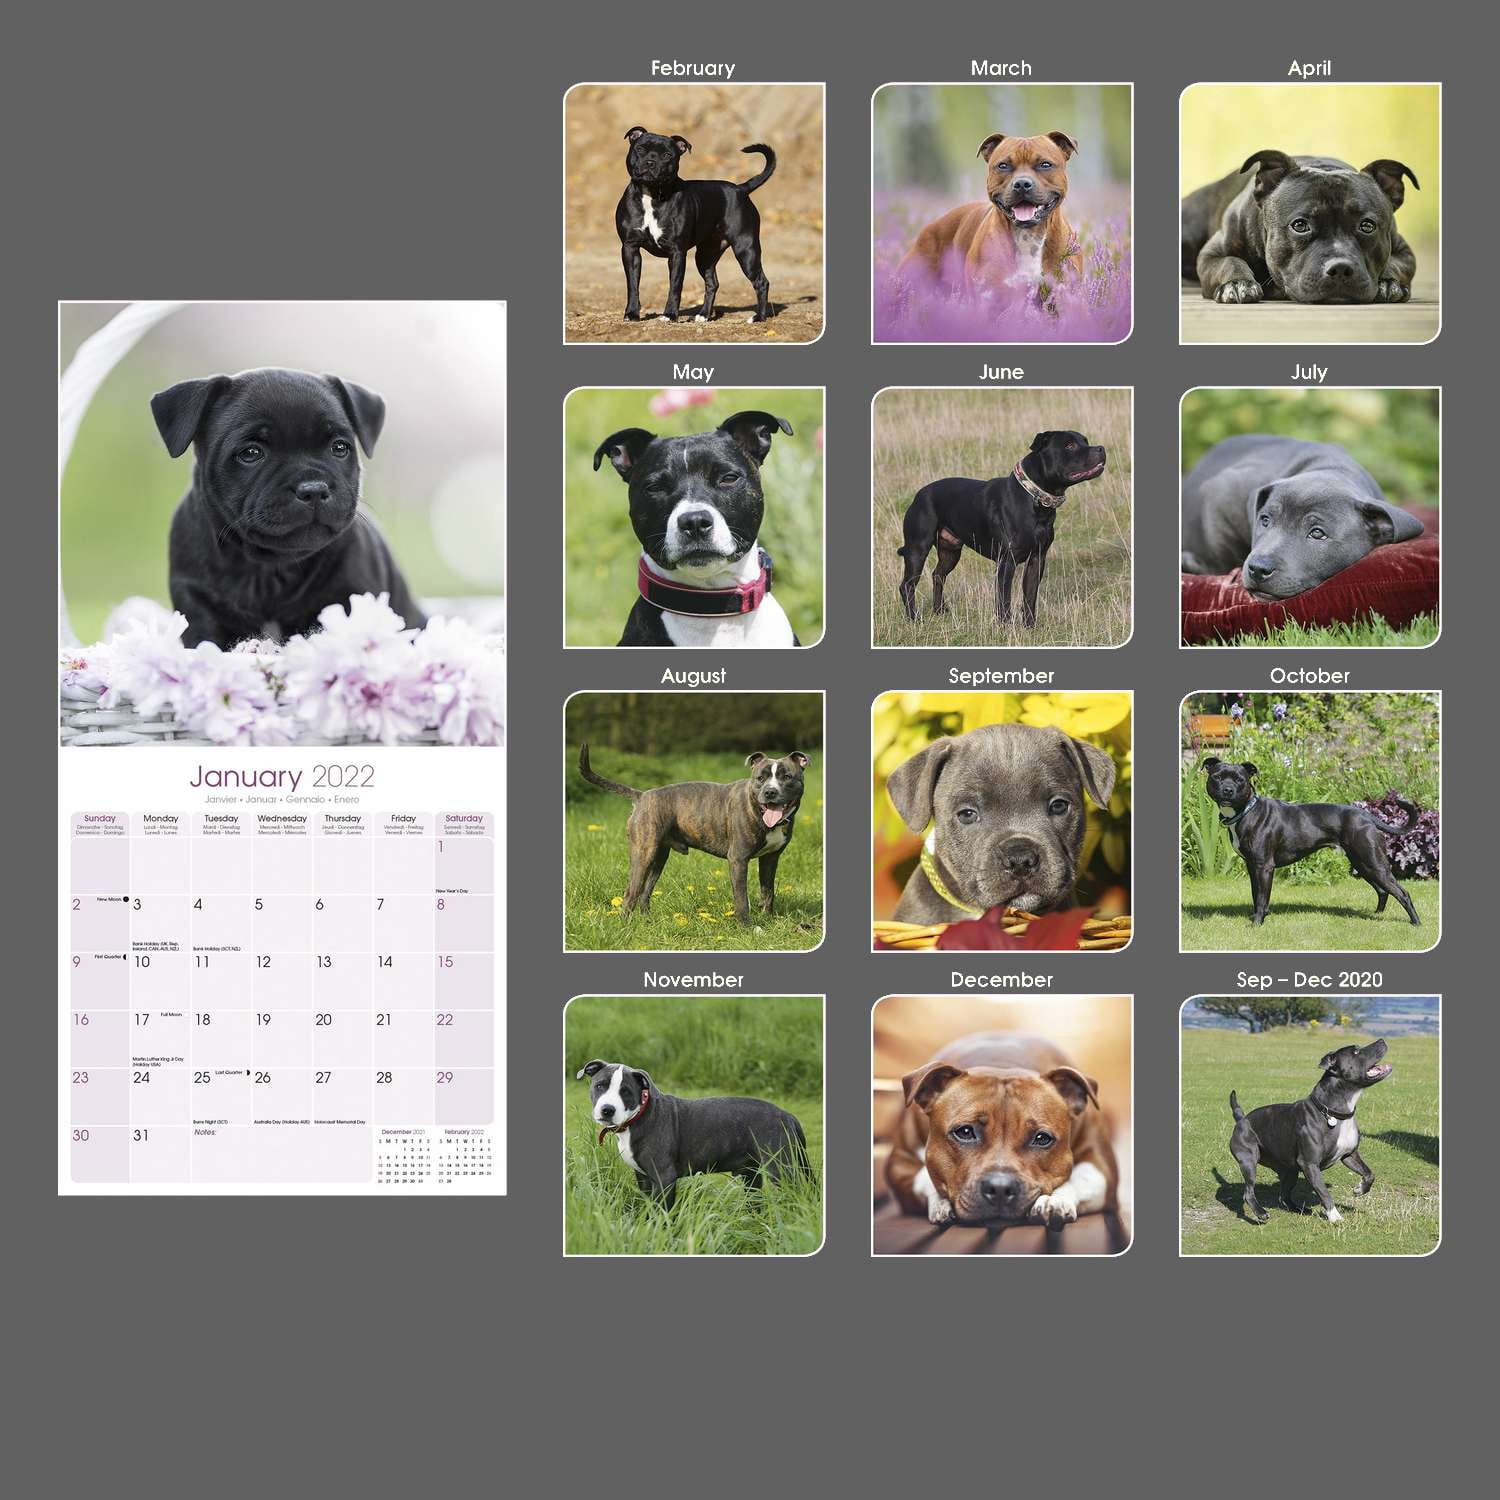 Staffordshire Bull Terrier Calendar 2020 Premium Dog Breed Calendars 